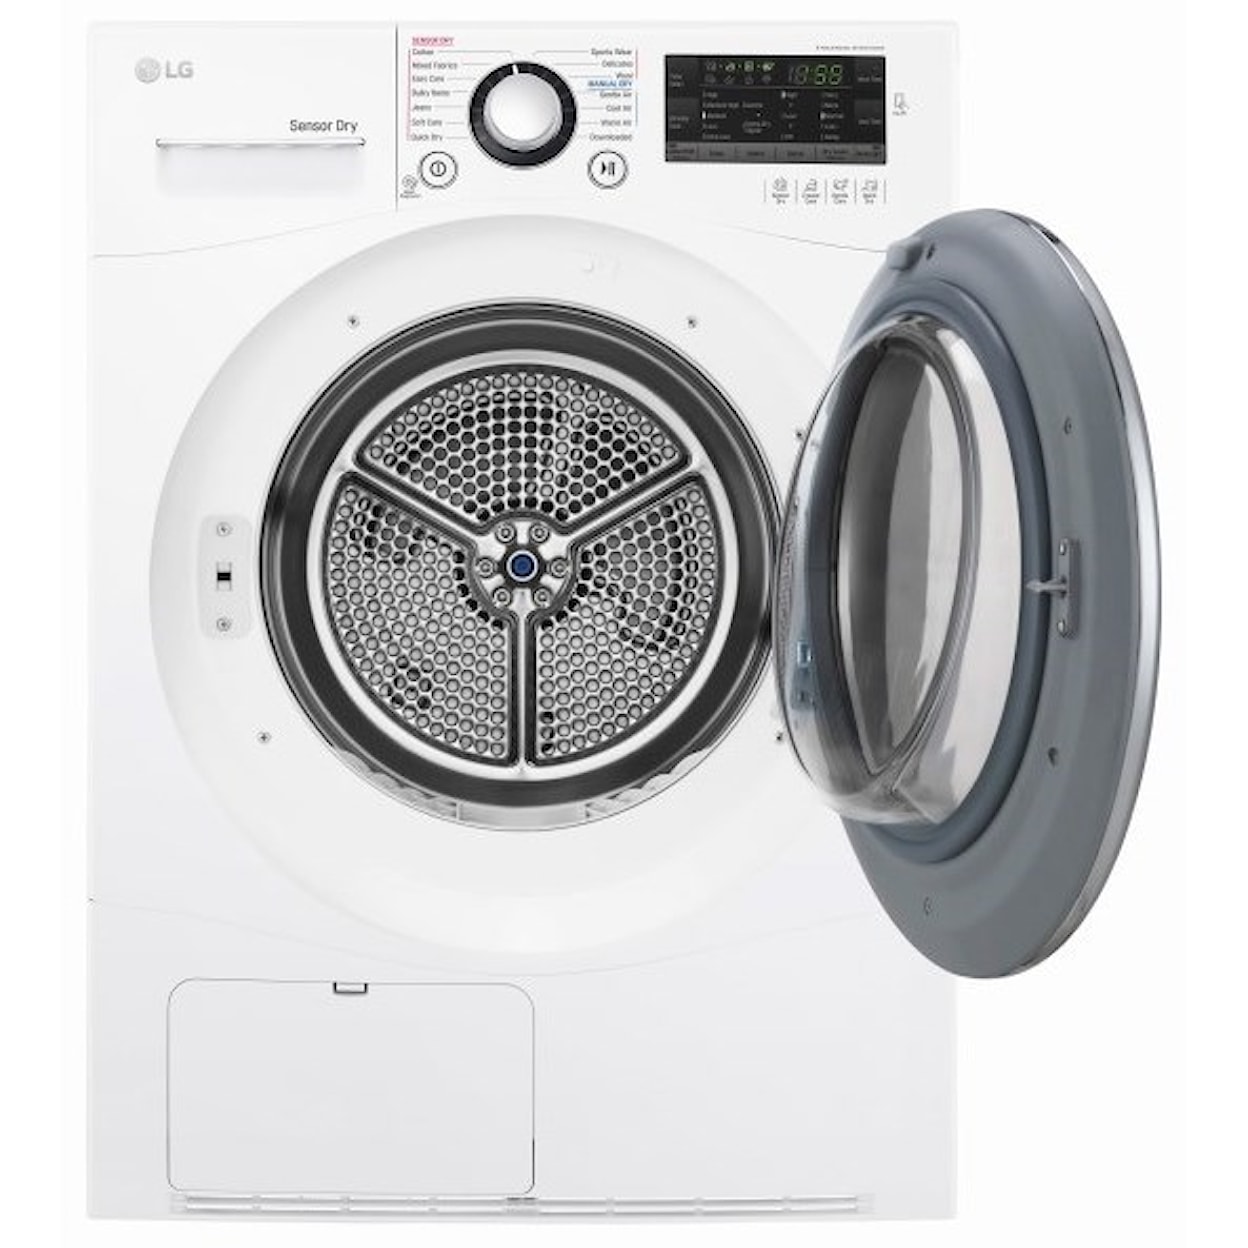 LG Appliances Dryers 4.2 cu.ft. Compact Front Load Dryer